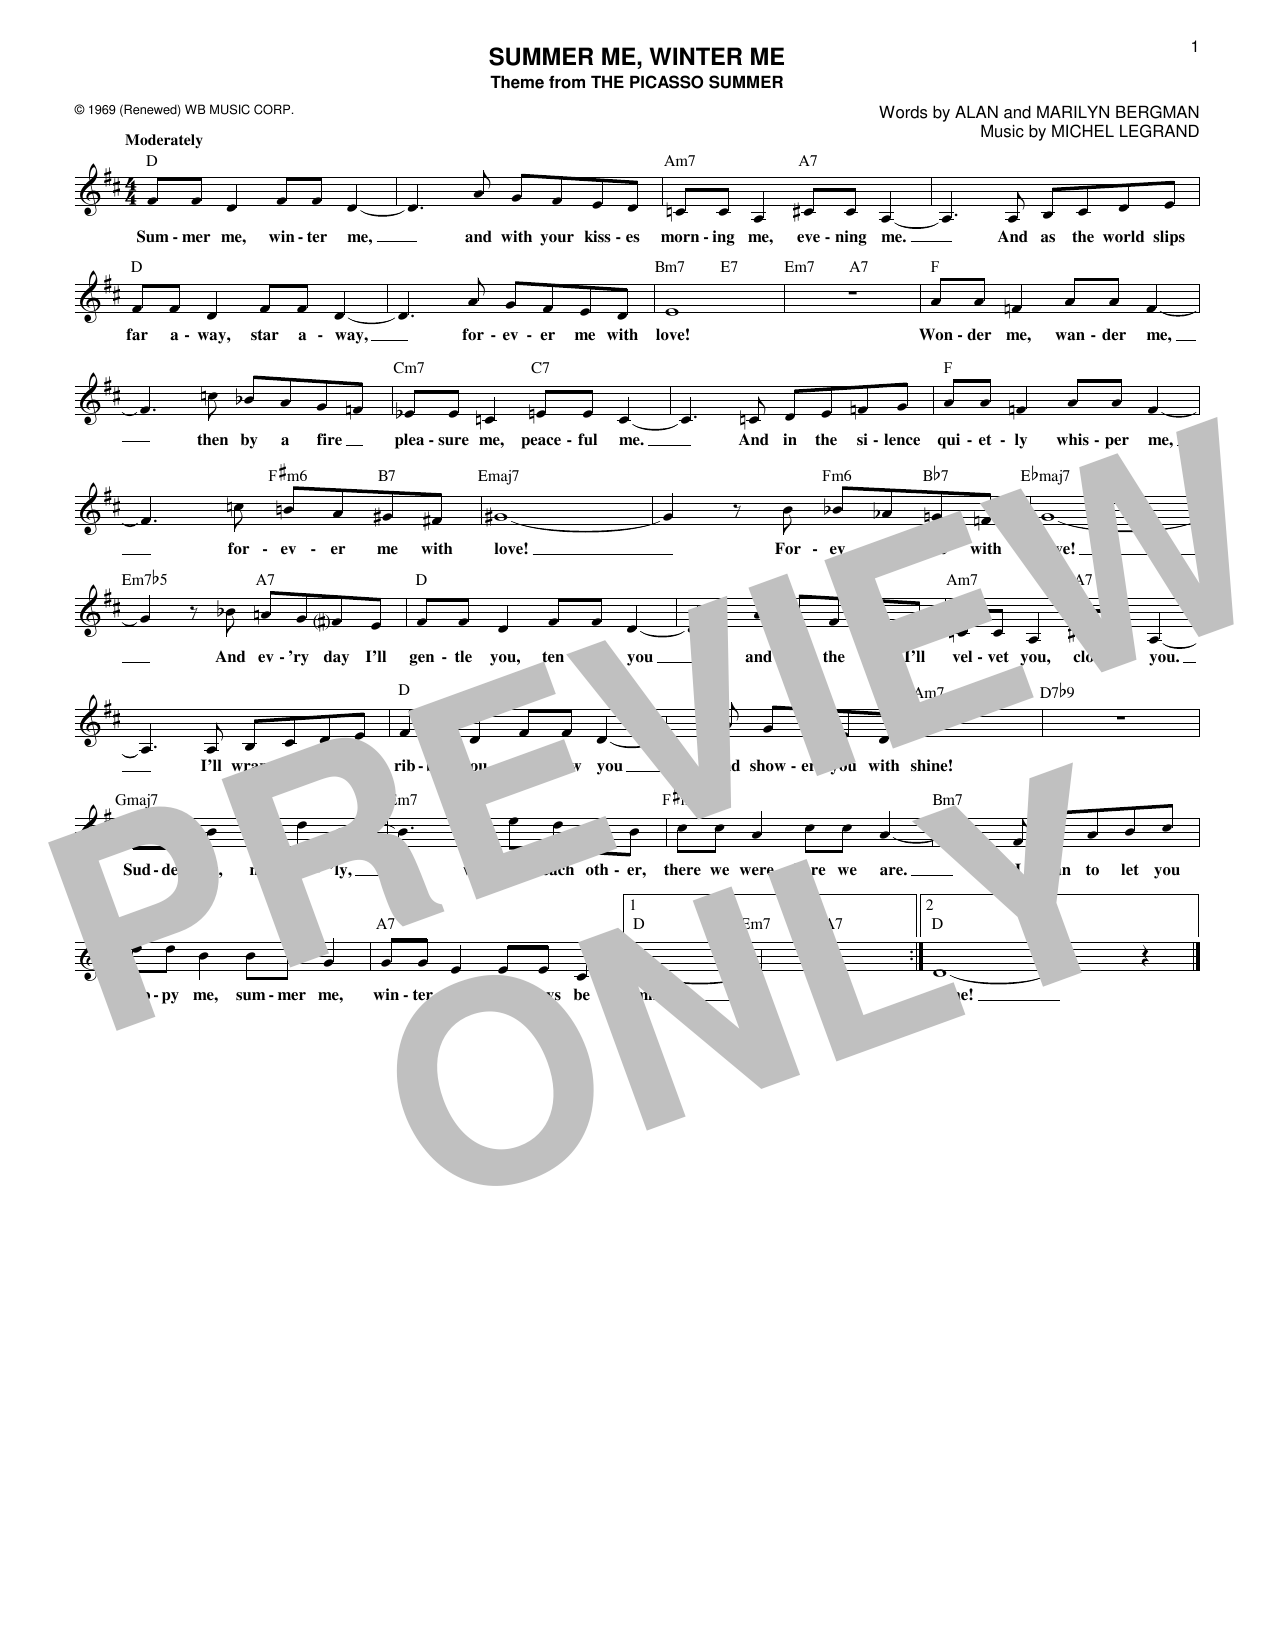 Marilyn Bergman Summer Me, Winter Me Sheet Music Notes & Chords for Melody Line, Lyrics & Chords - Download or Print PDF